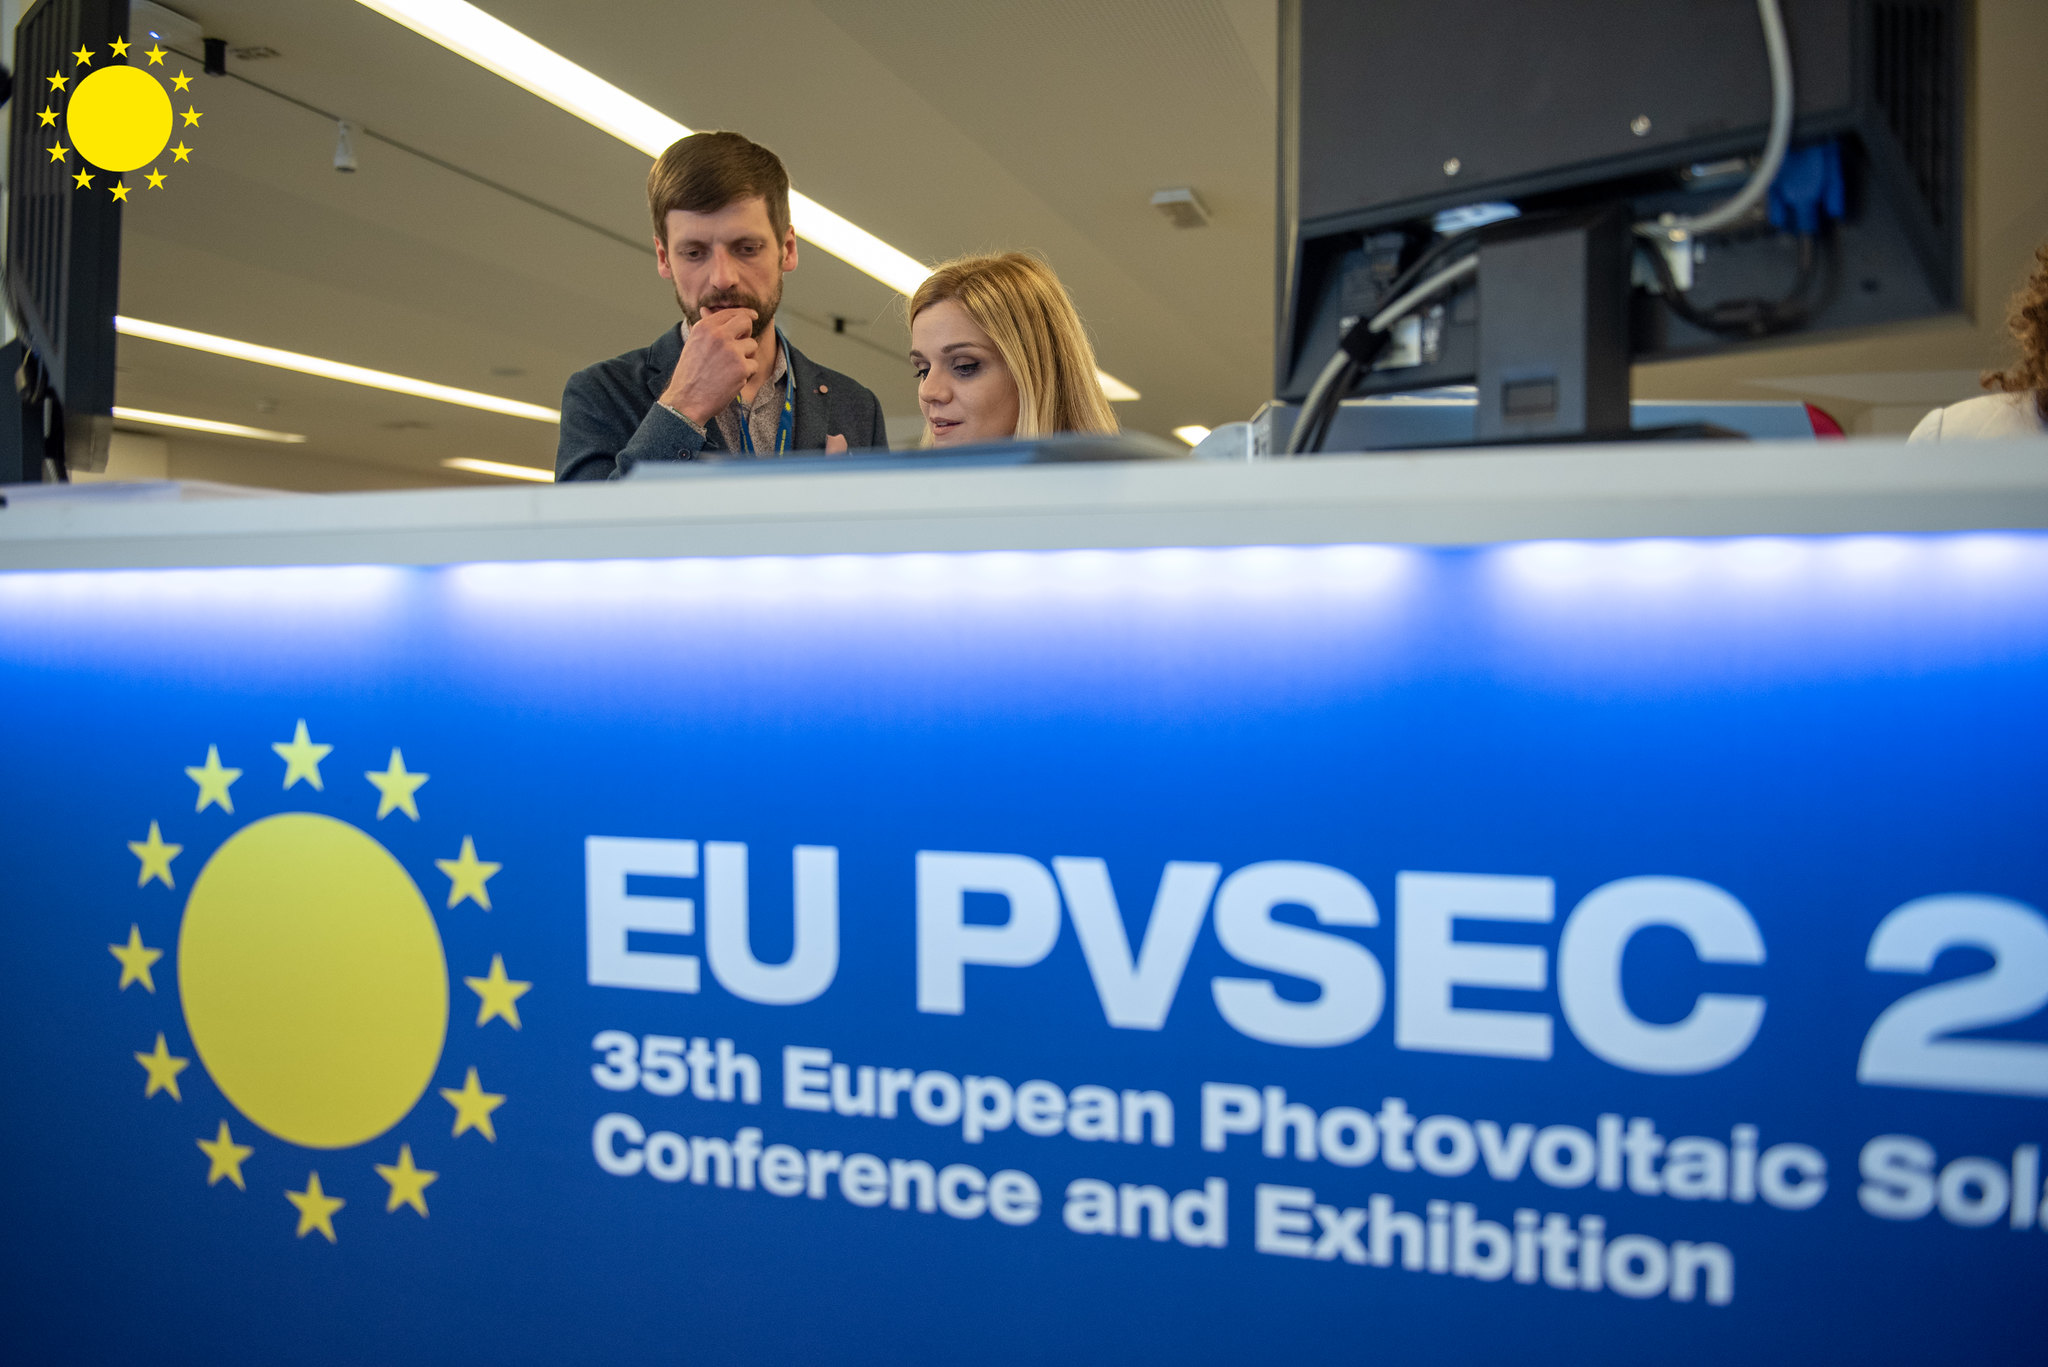 EU PVSEC 37th European Photovoltaic Solar Energy Conference and